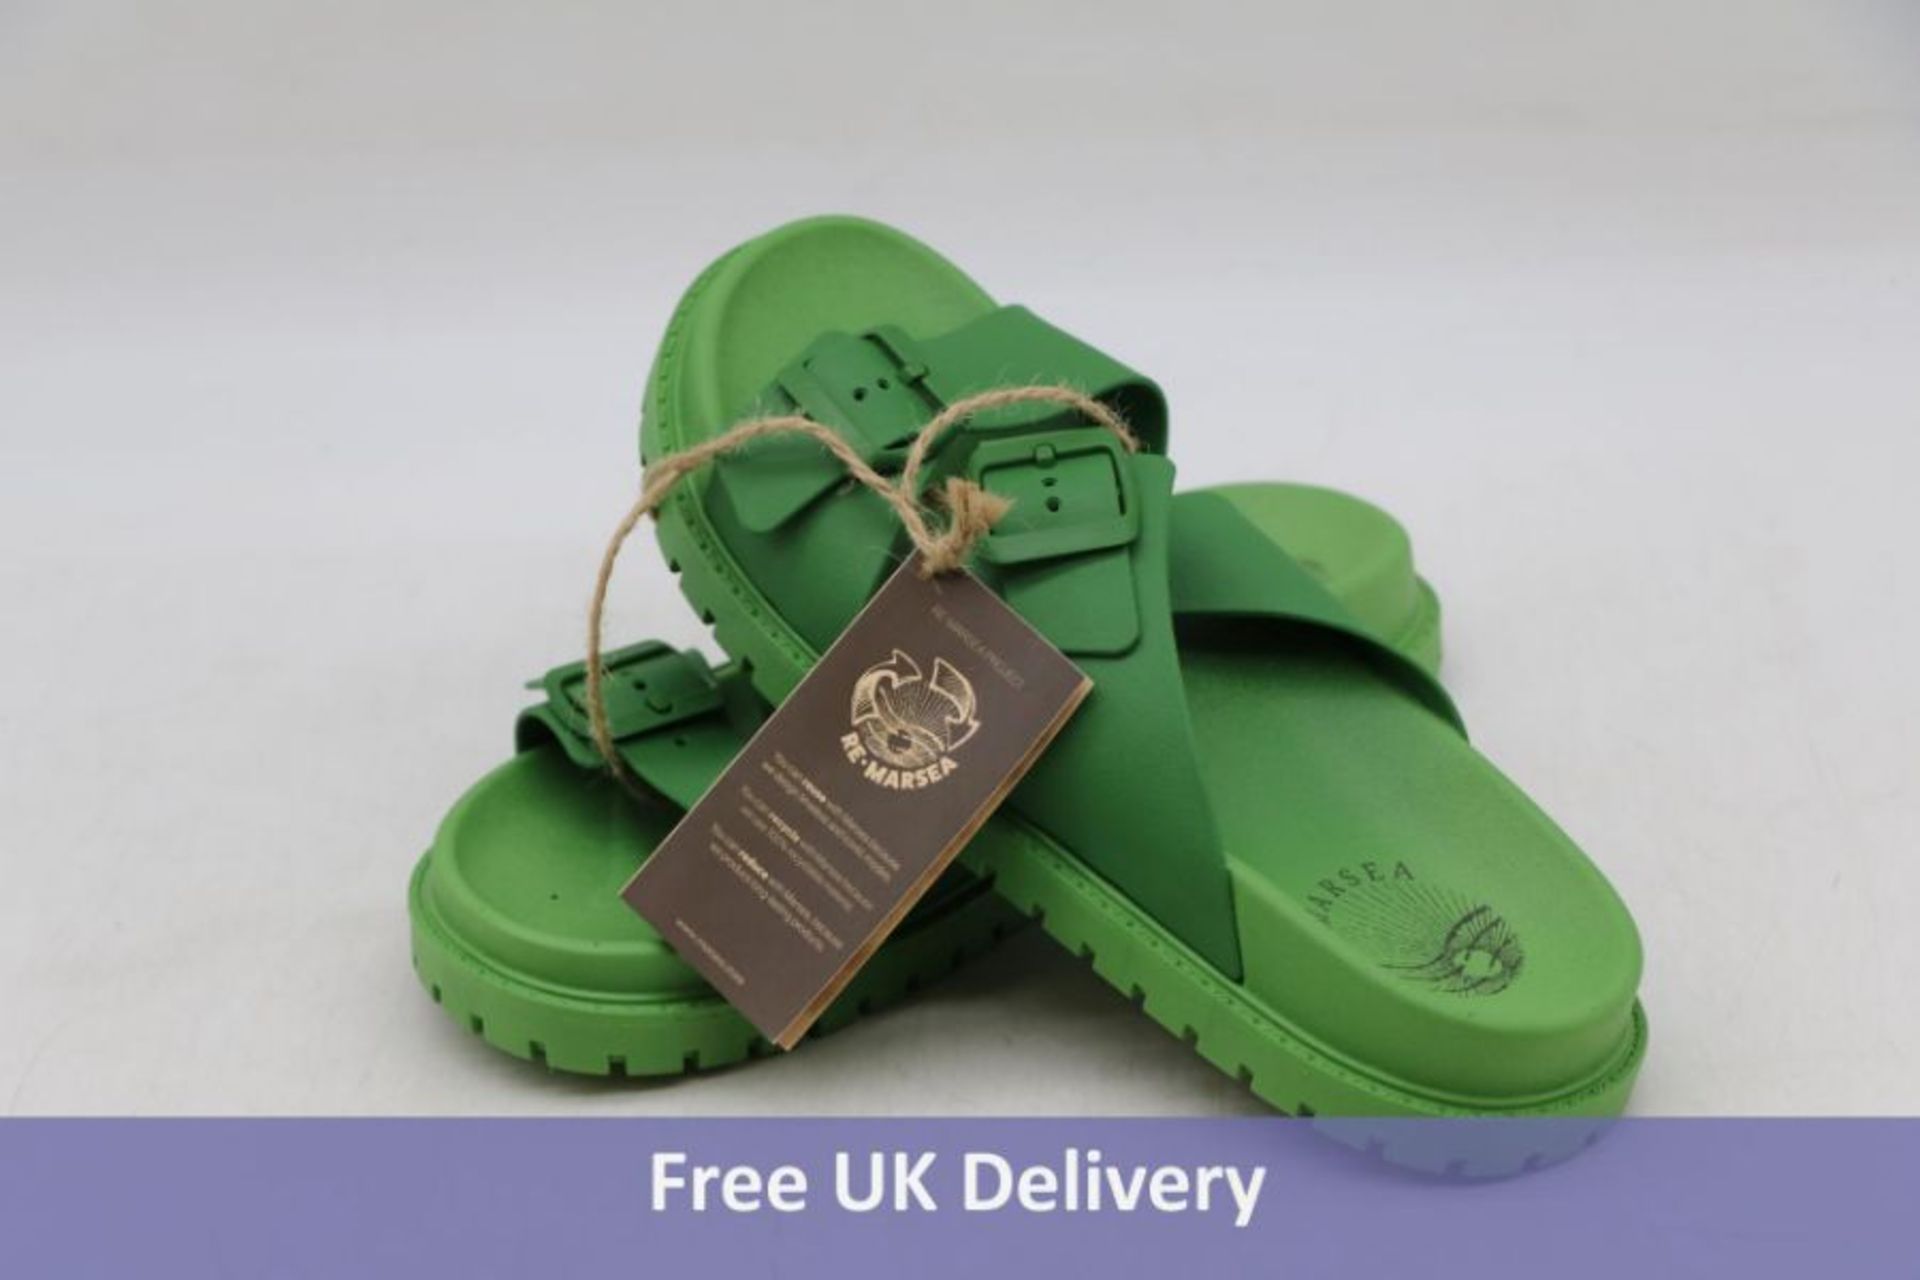 Yselia Unisex Double Strap Sandals, Forest Green, Size 42. Box damaged